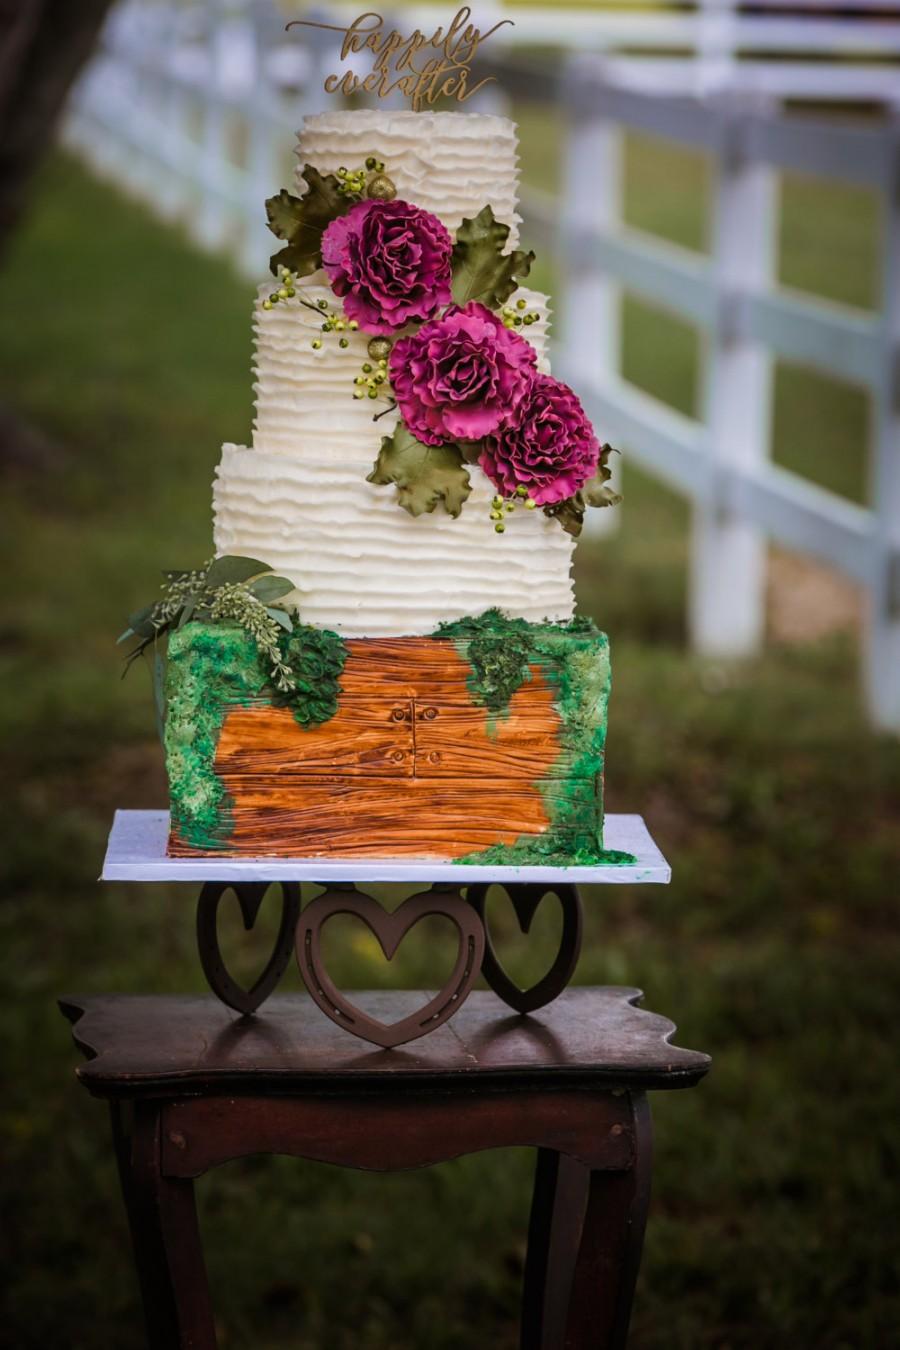 زفاف - Wedding cake stand, heavy duty to hold a multi-tier cake stand, western equestrian decor